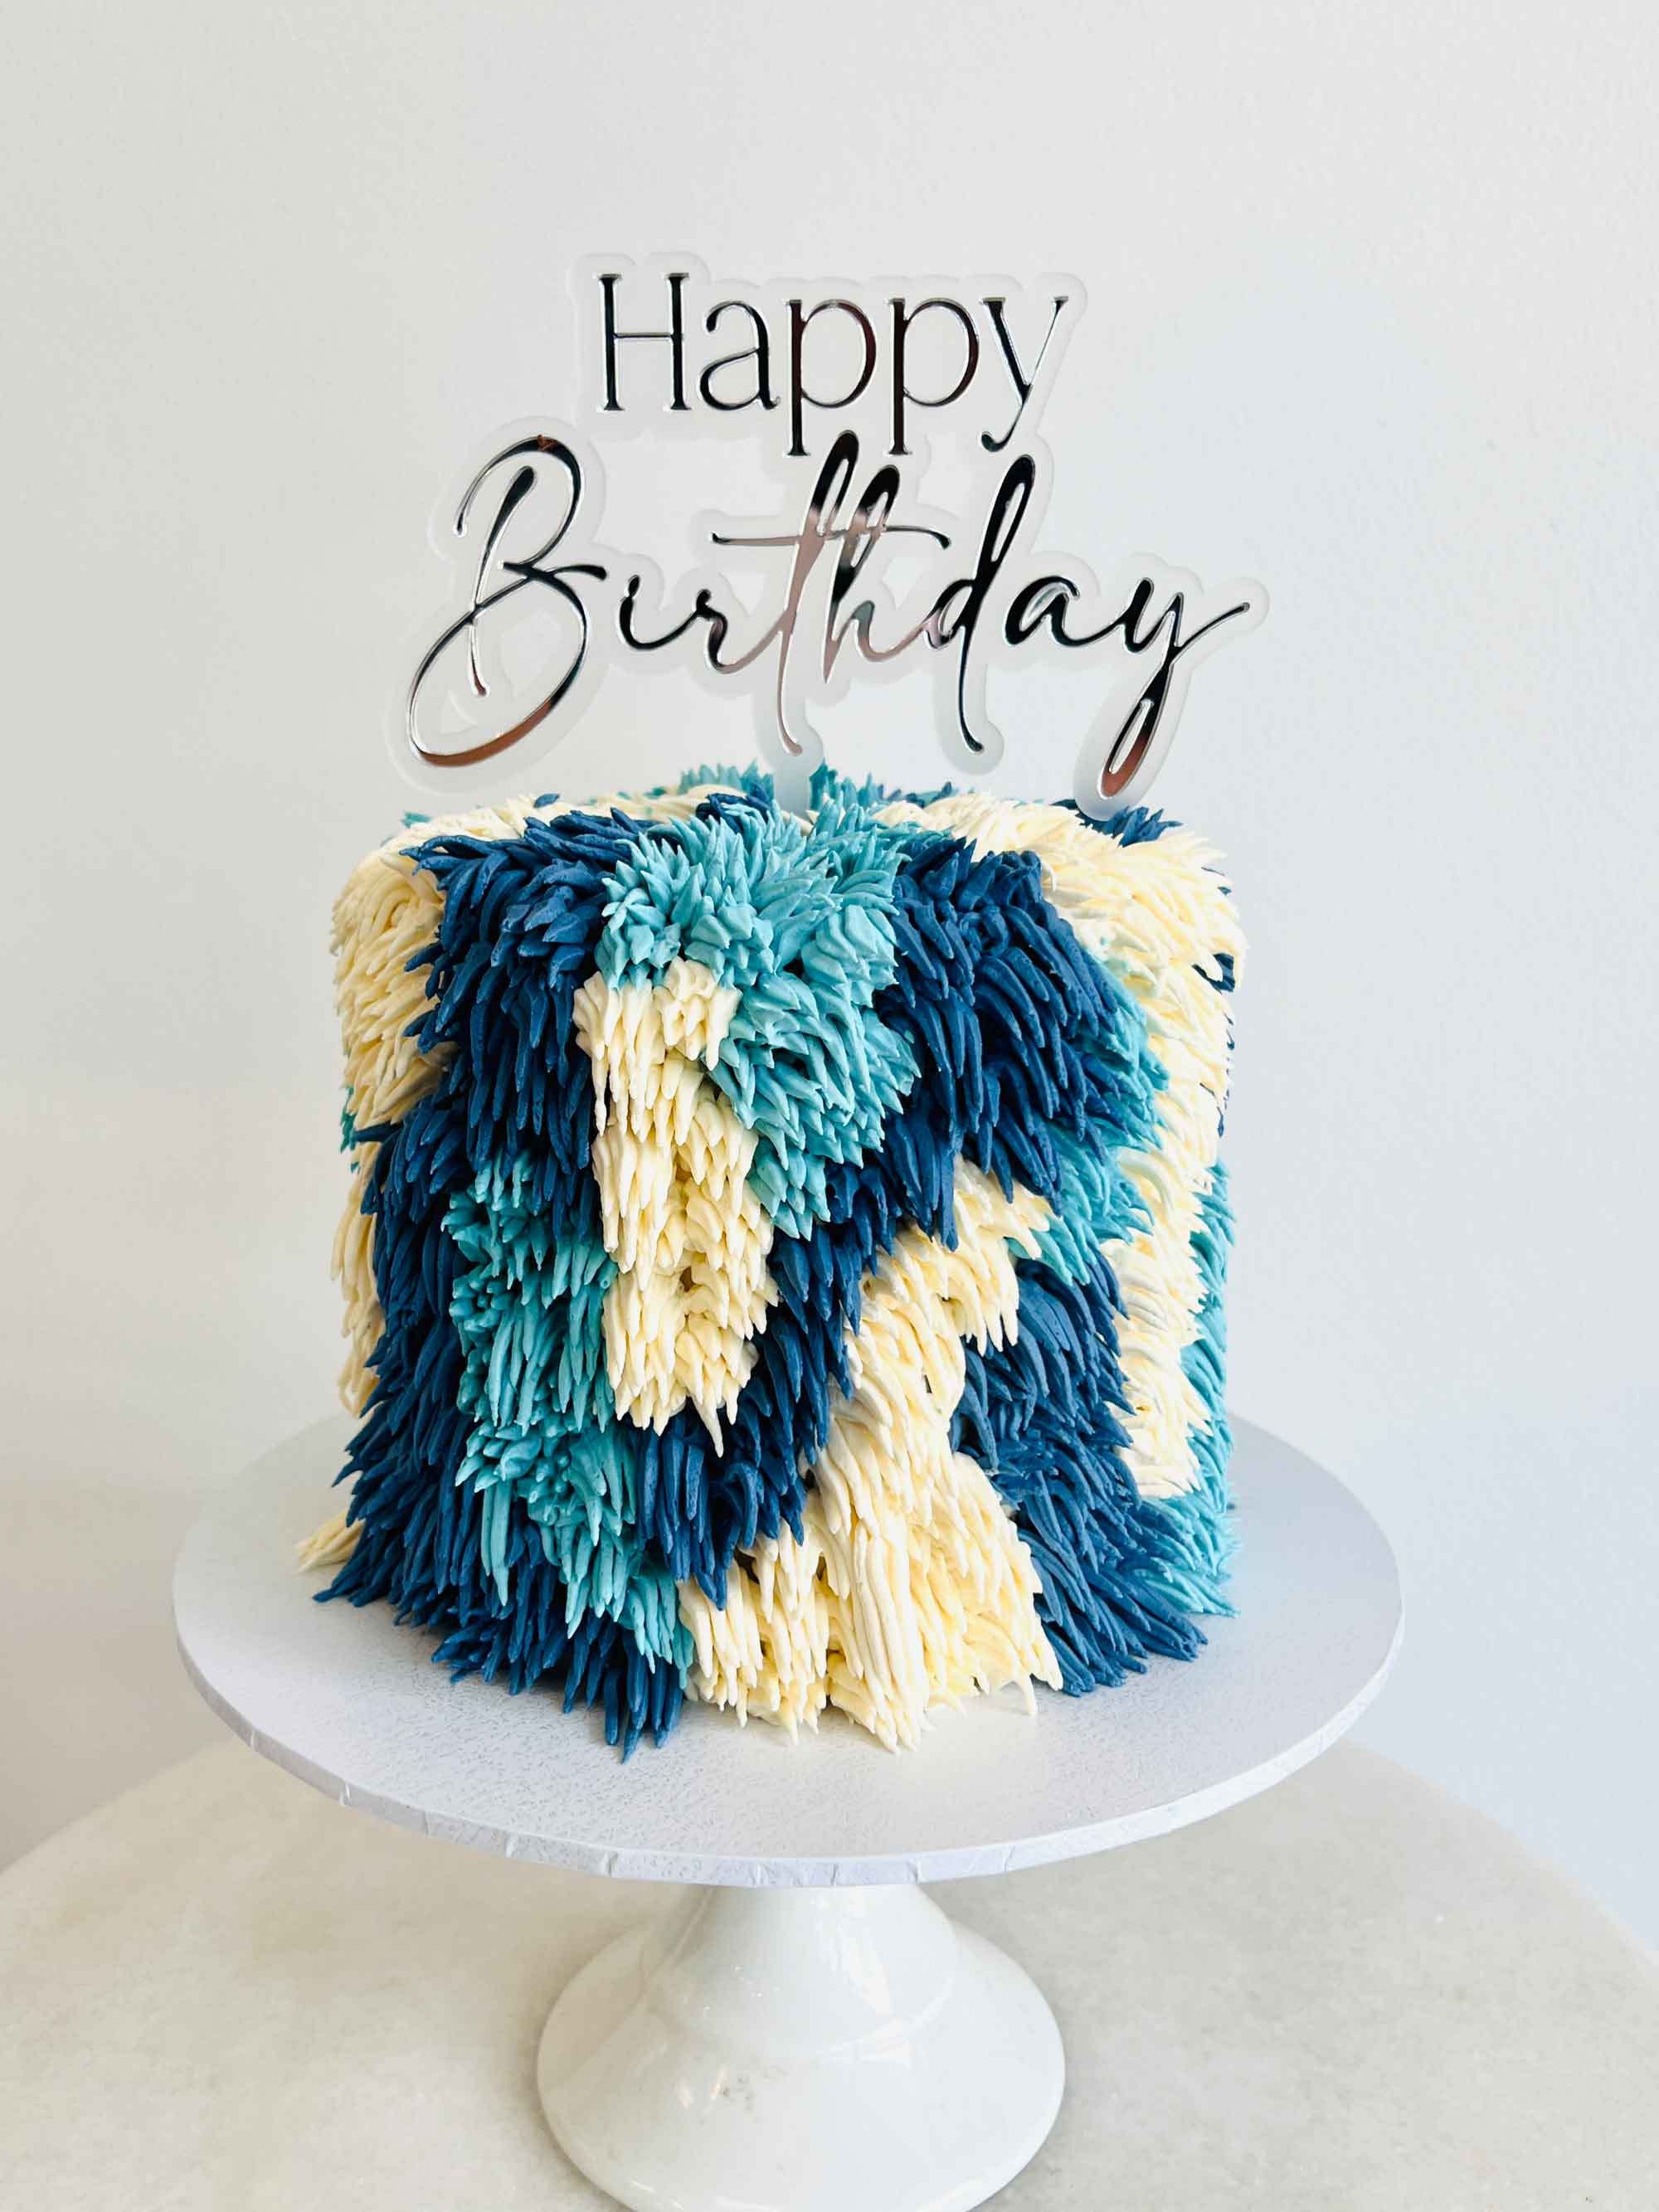 Danie Cakes - Shades of blue 21st birthday cake | Facebook